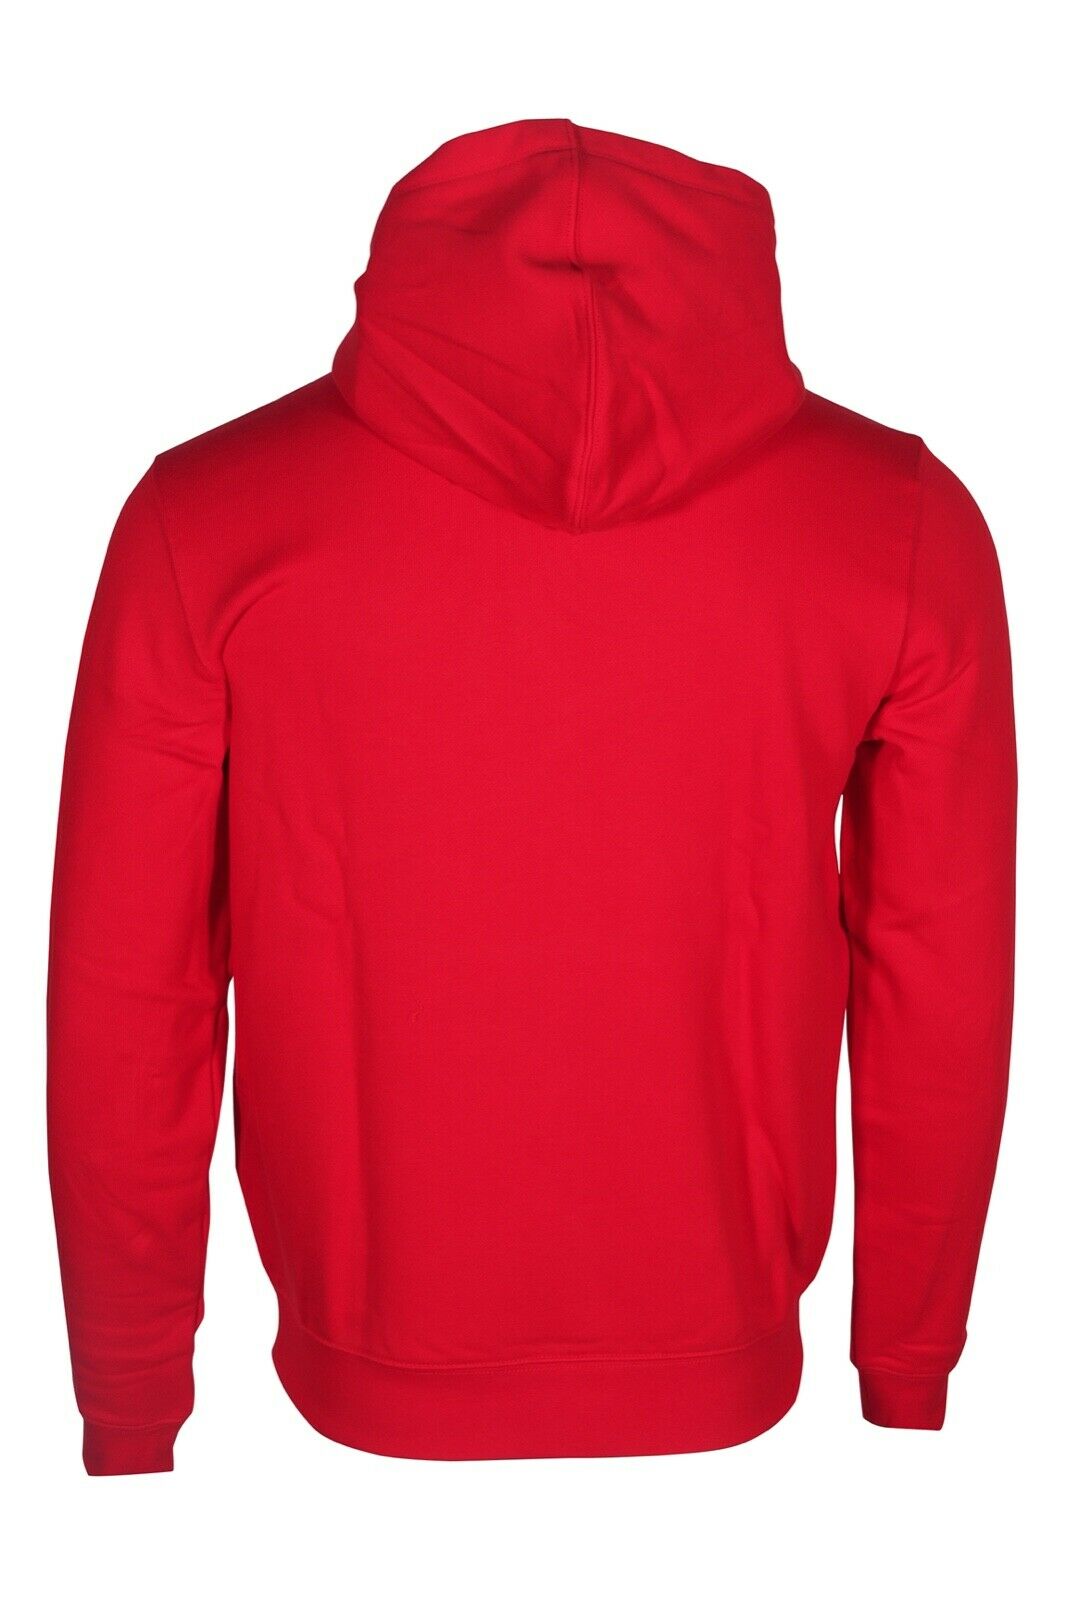 Lacoste Men's Hooded Fleece Sweatshirt in Red SH2162-51 240